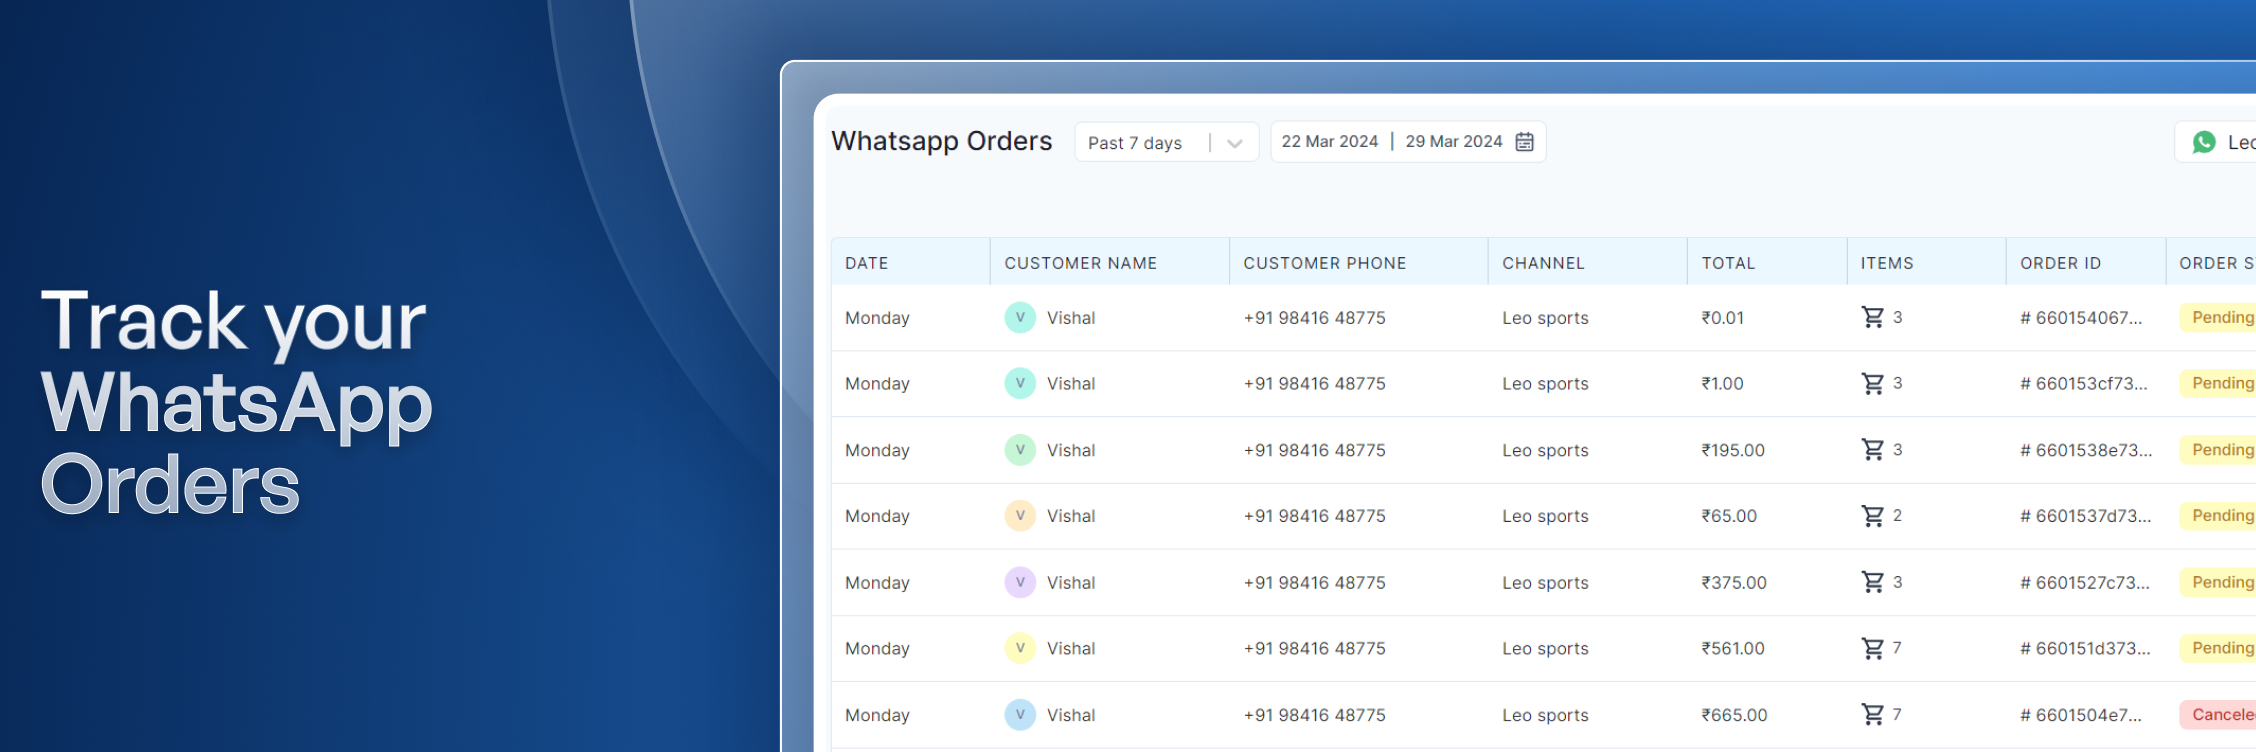 Gallabox tracking WhatsApp orders